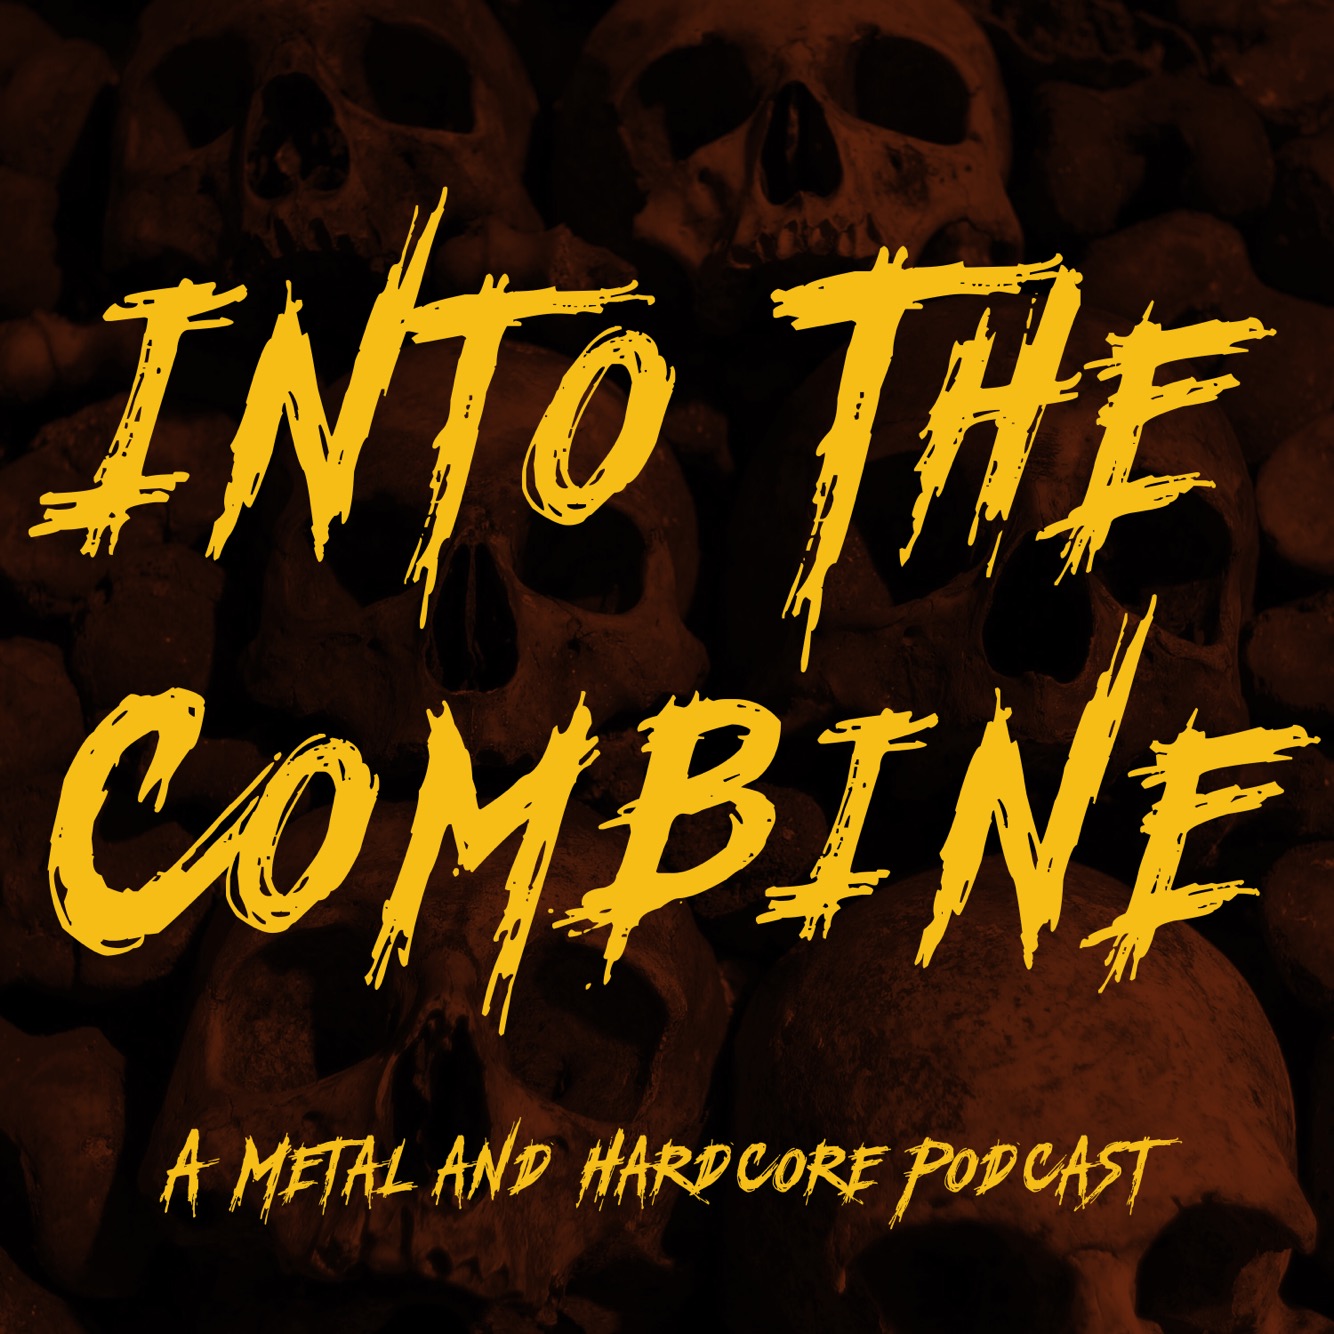 71. Deicide Interview & Gateway Death Metal Albums